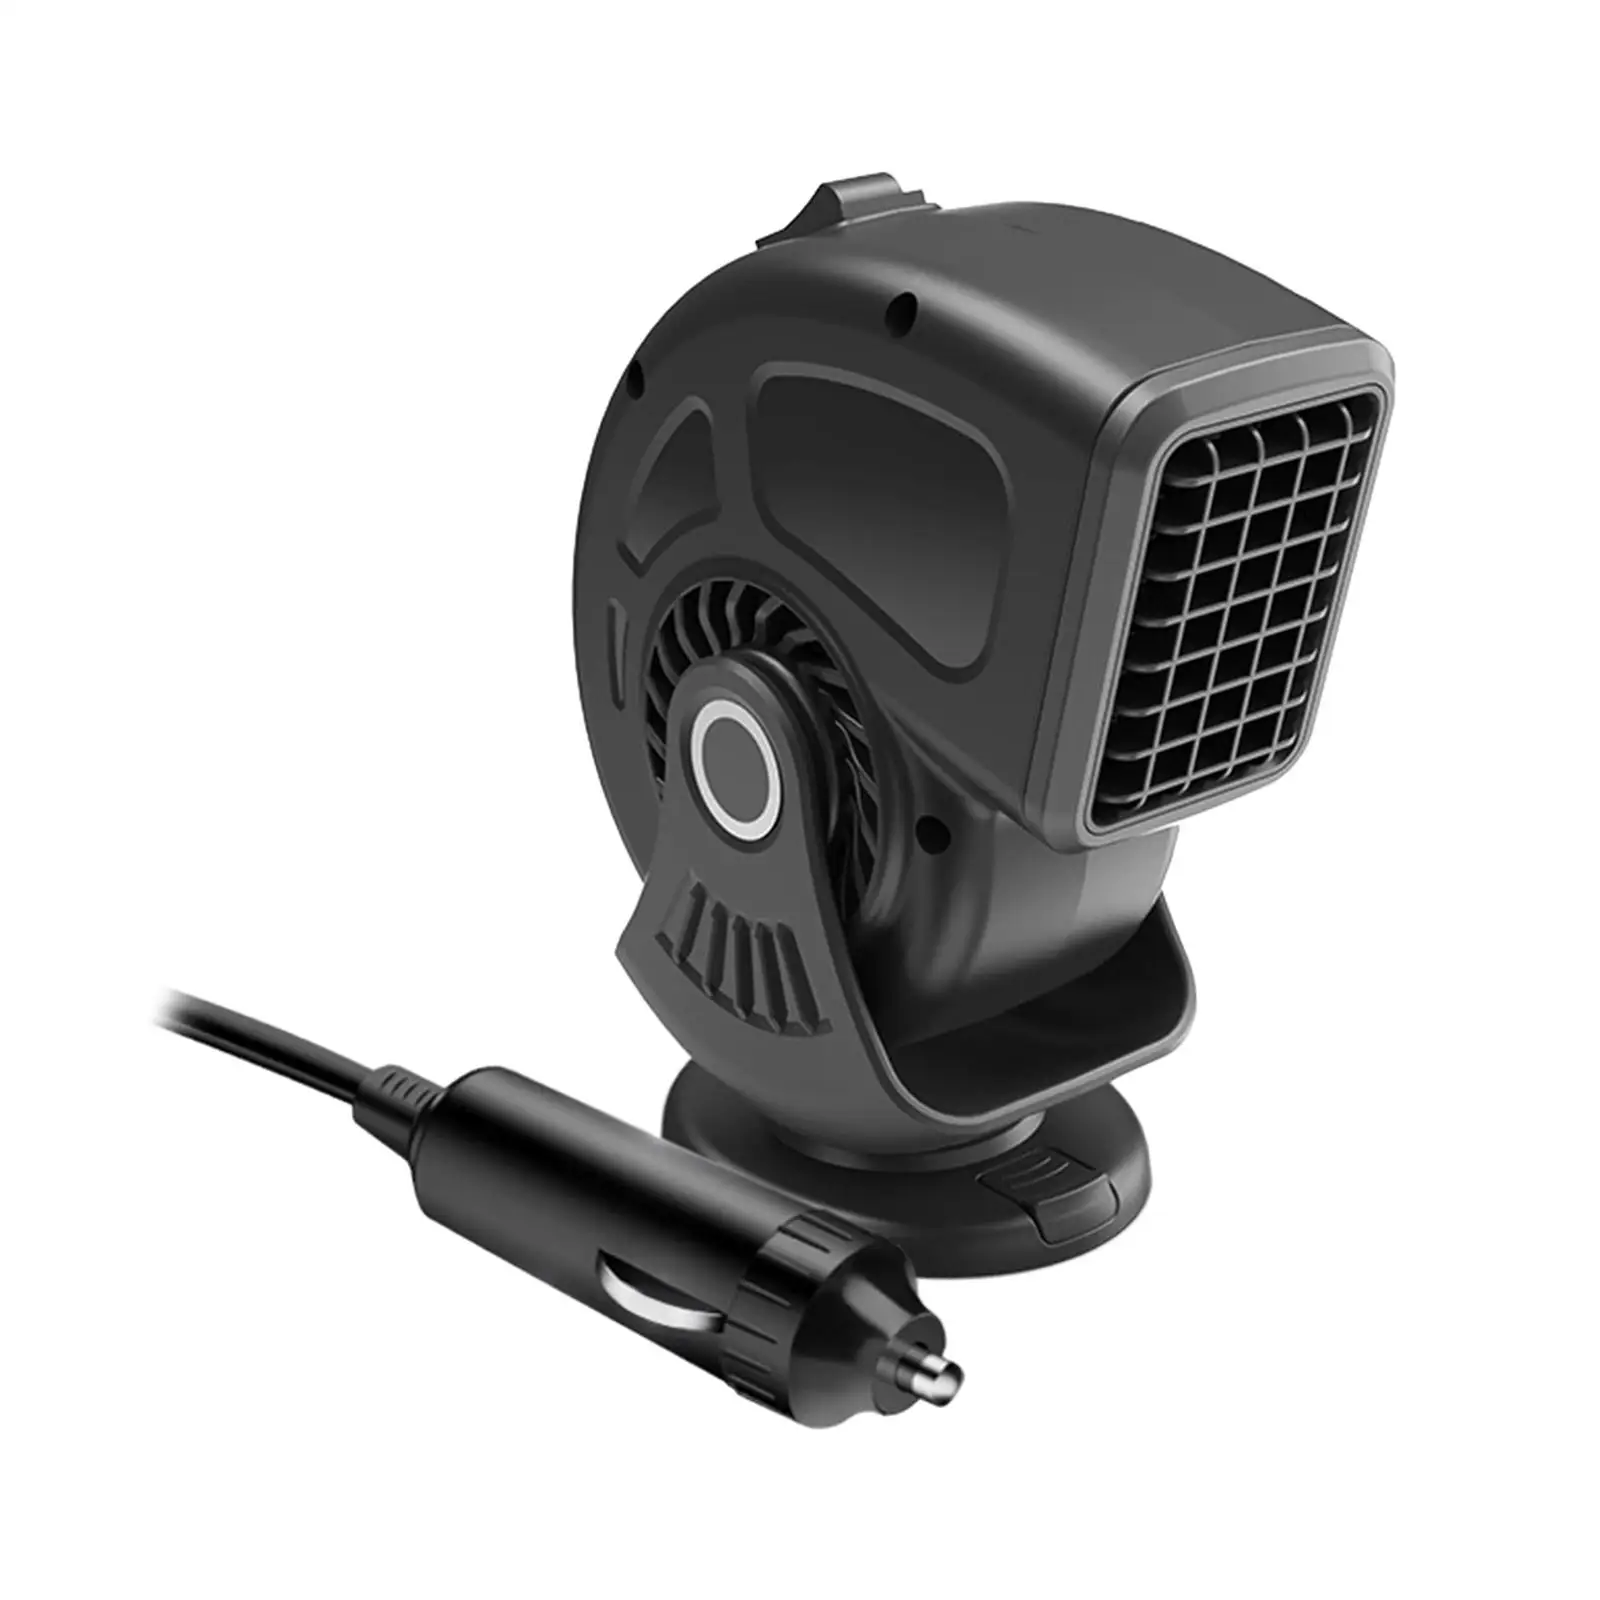 Auto Heater 360 Degree Rotation Portable Auto Heating Fan for Trucks